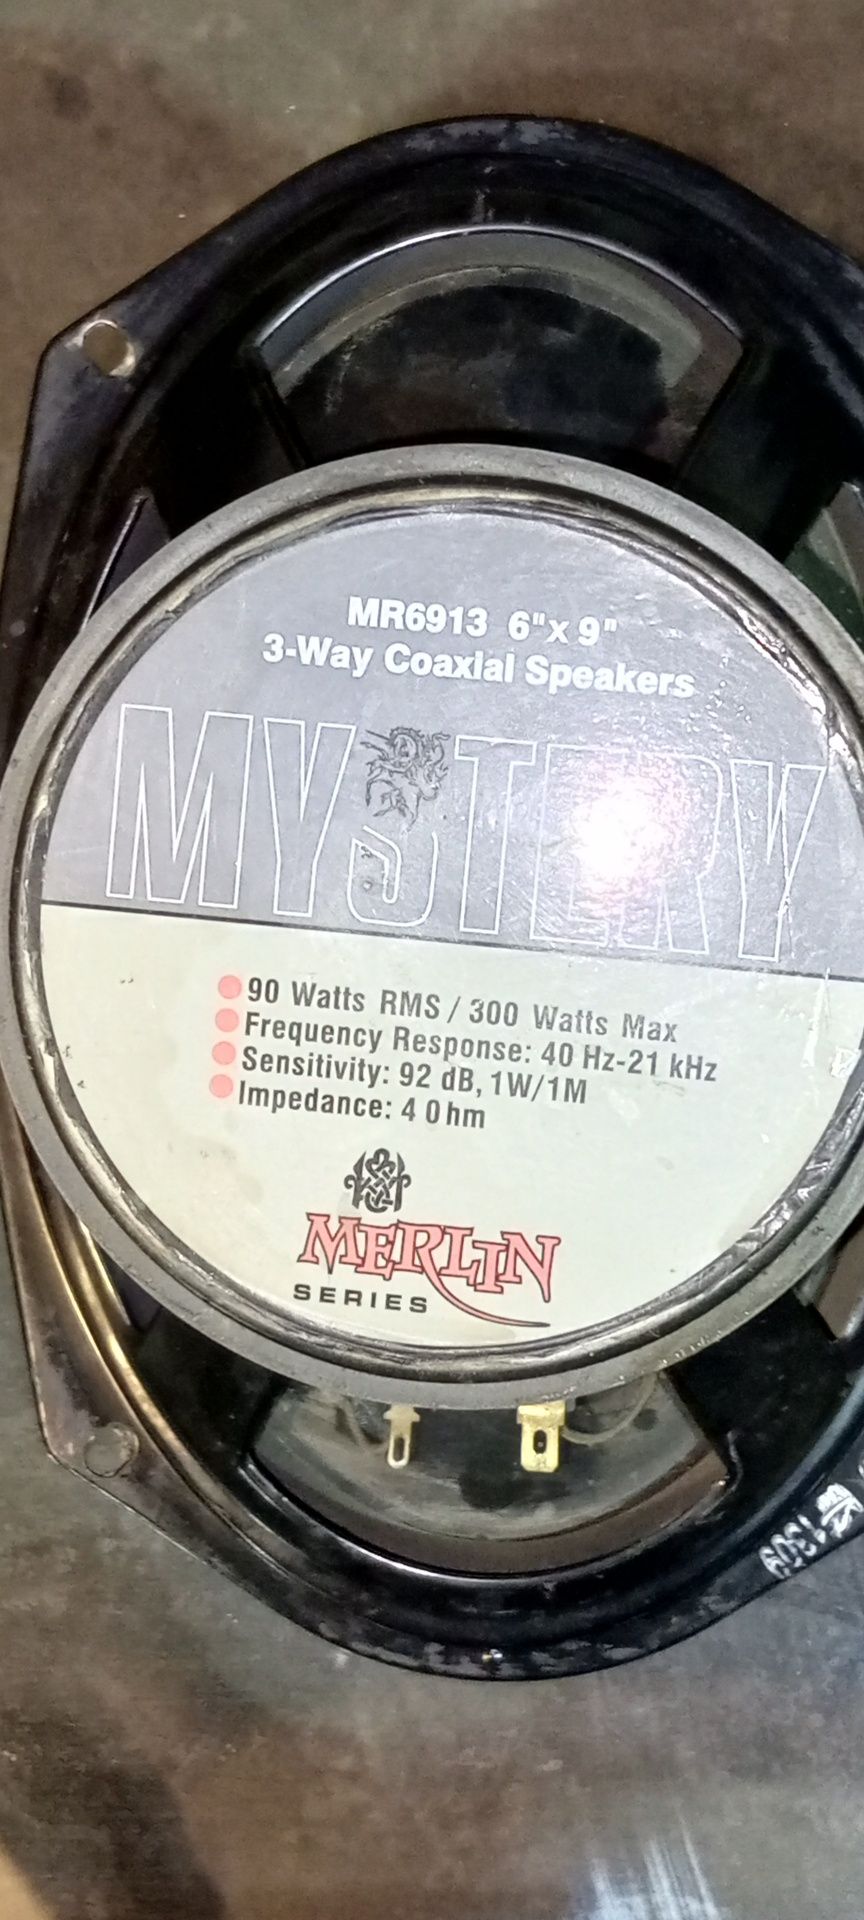 MYSTERY 90 Watts RMS/300 Watts Max